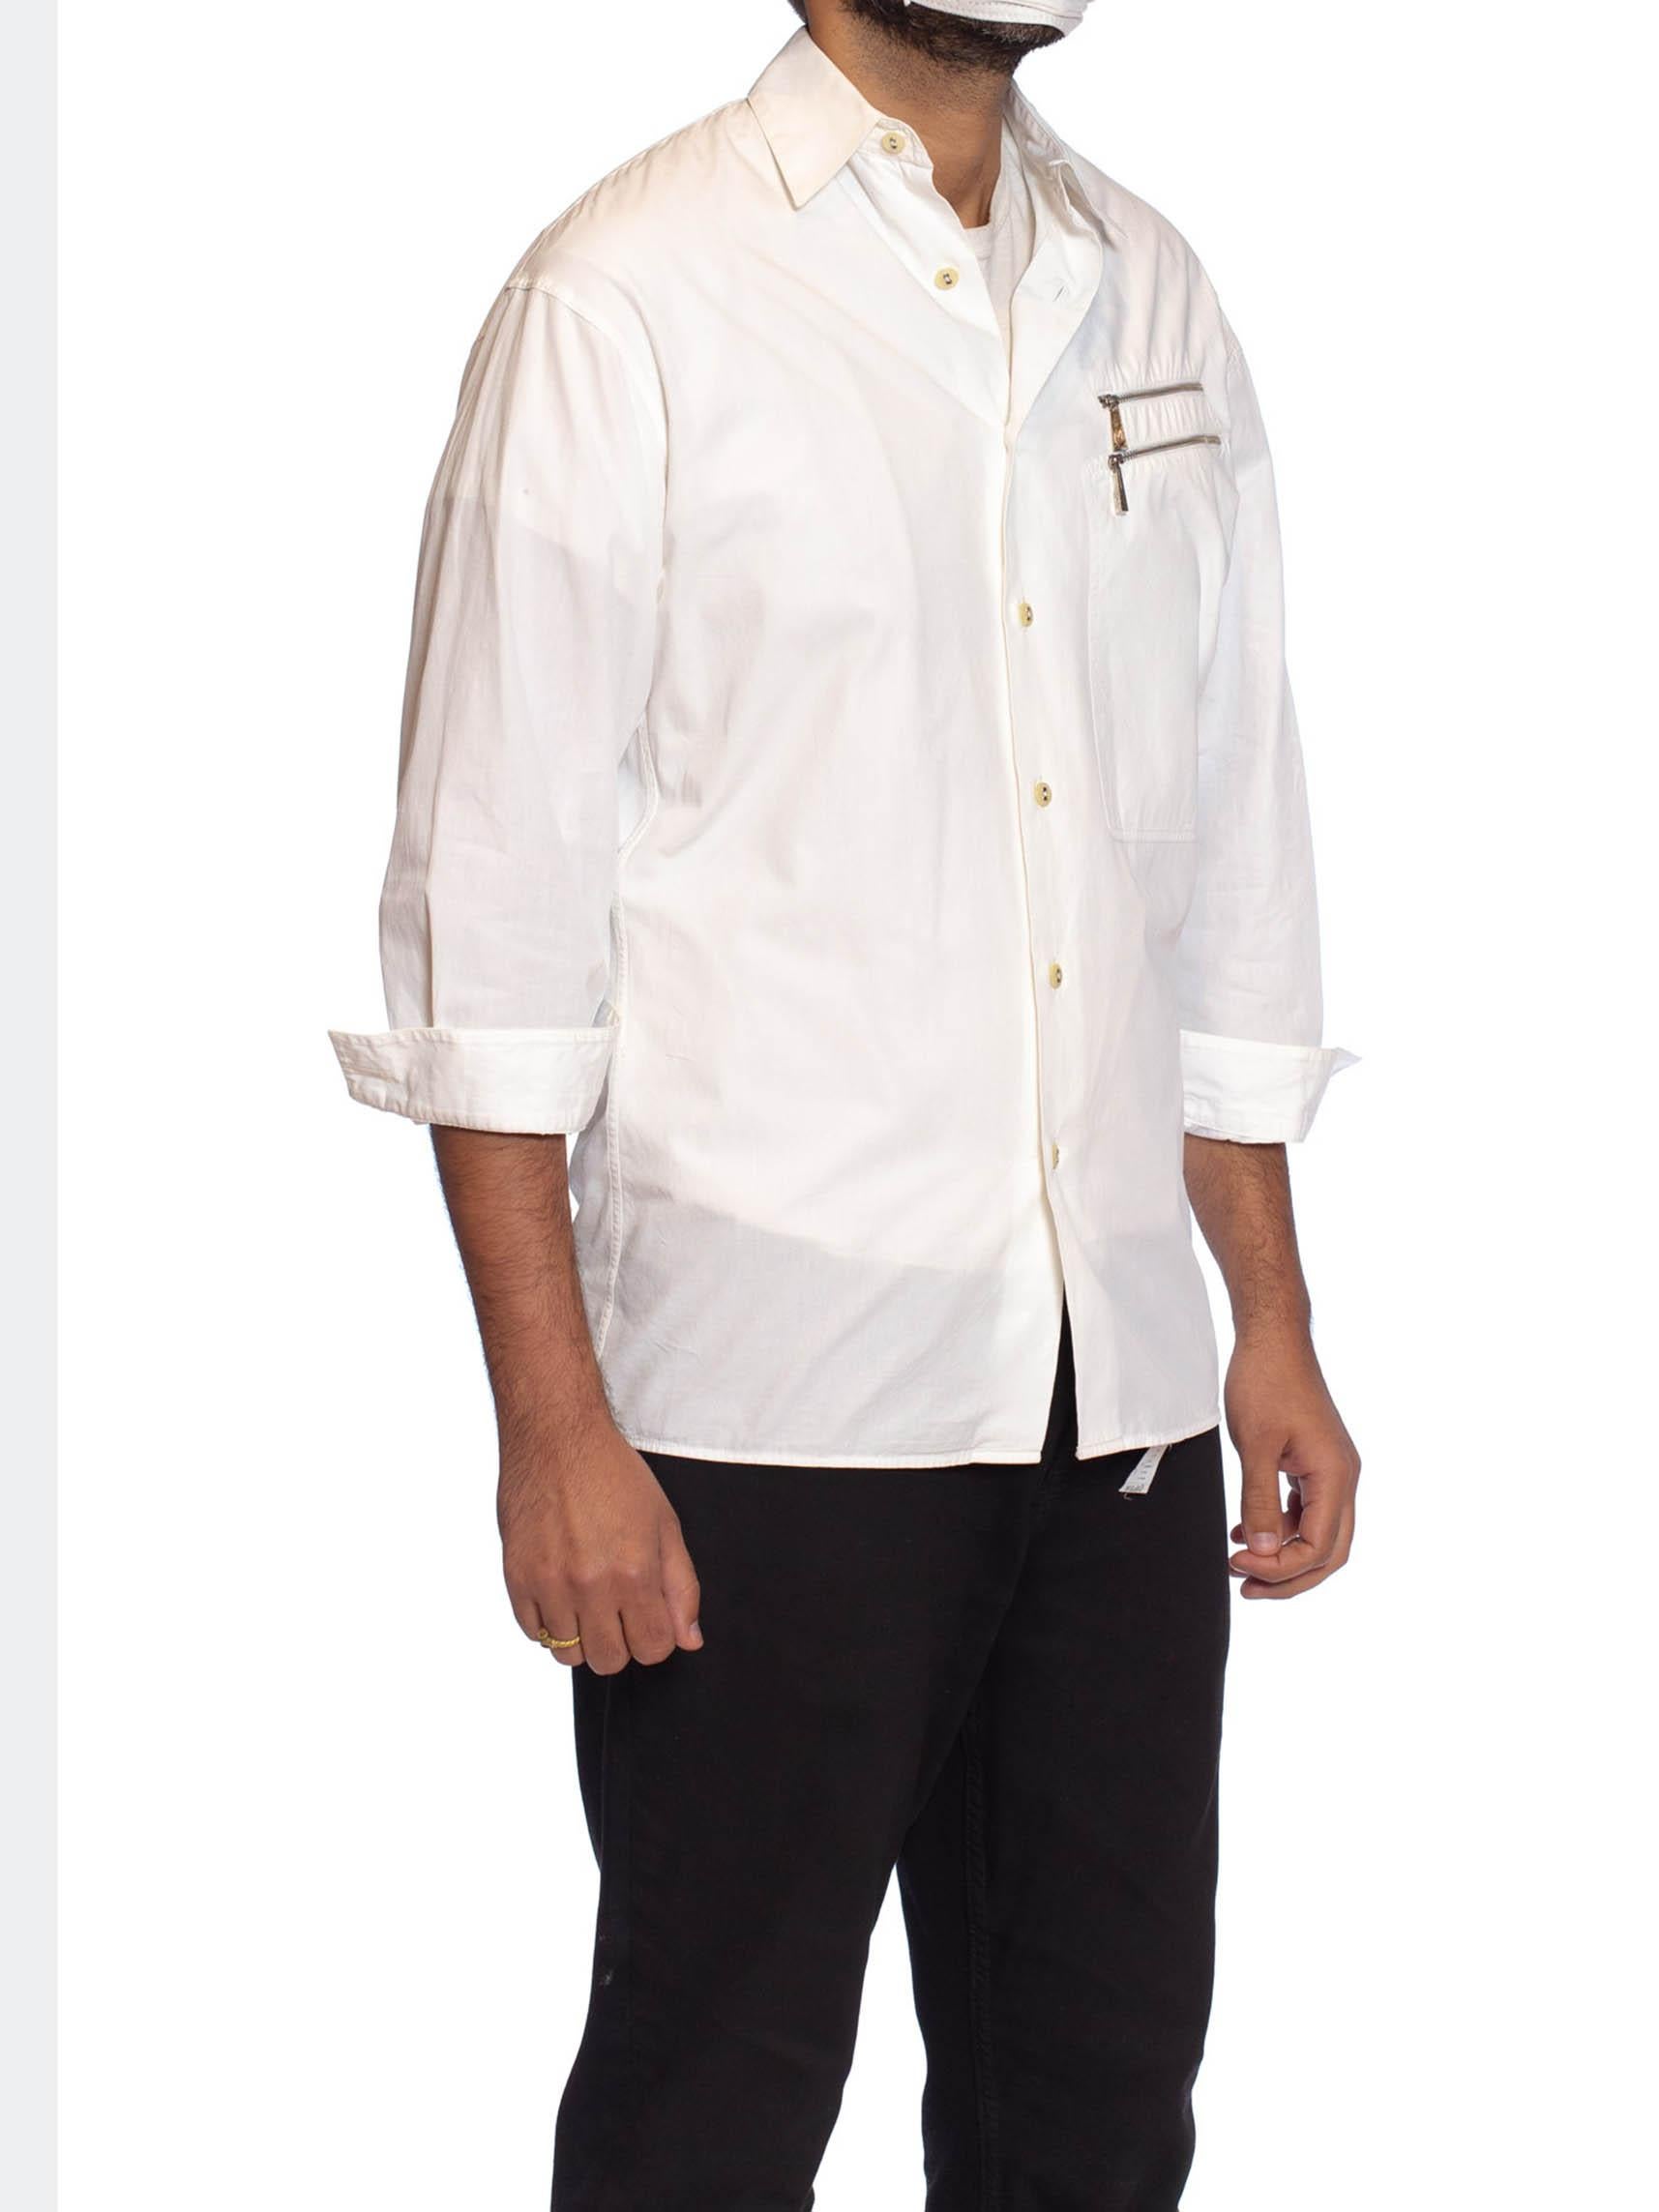 Men's 1980S CLAUDE MONTANA White Cotton Mens Shirt With Zipper Details